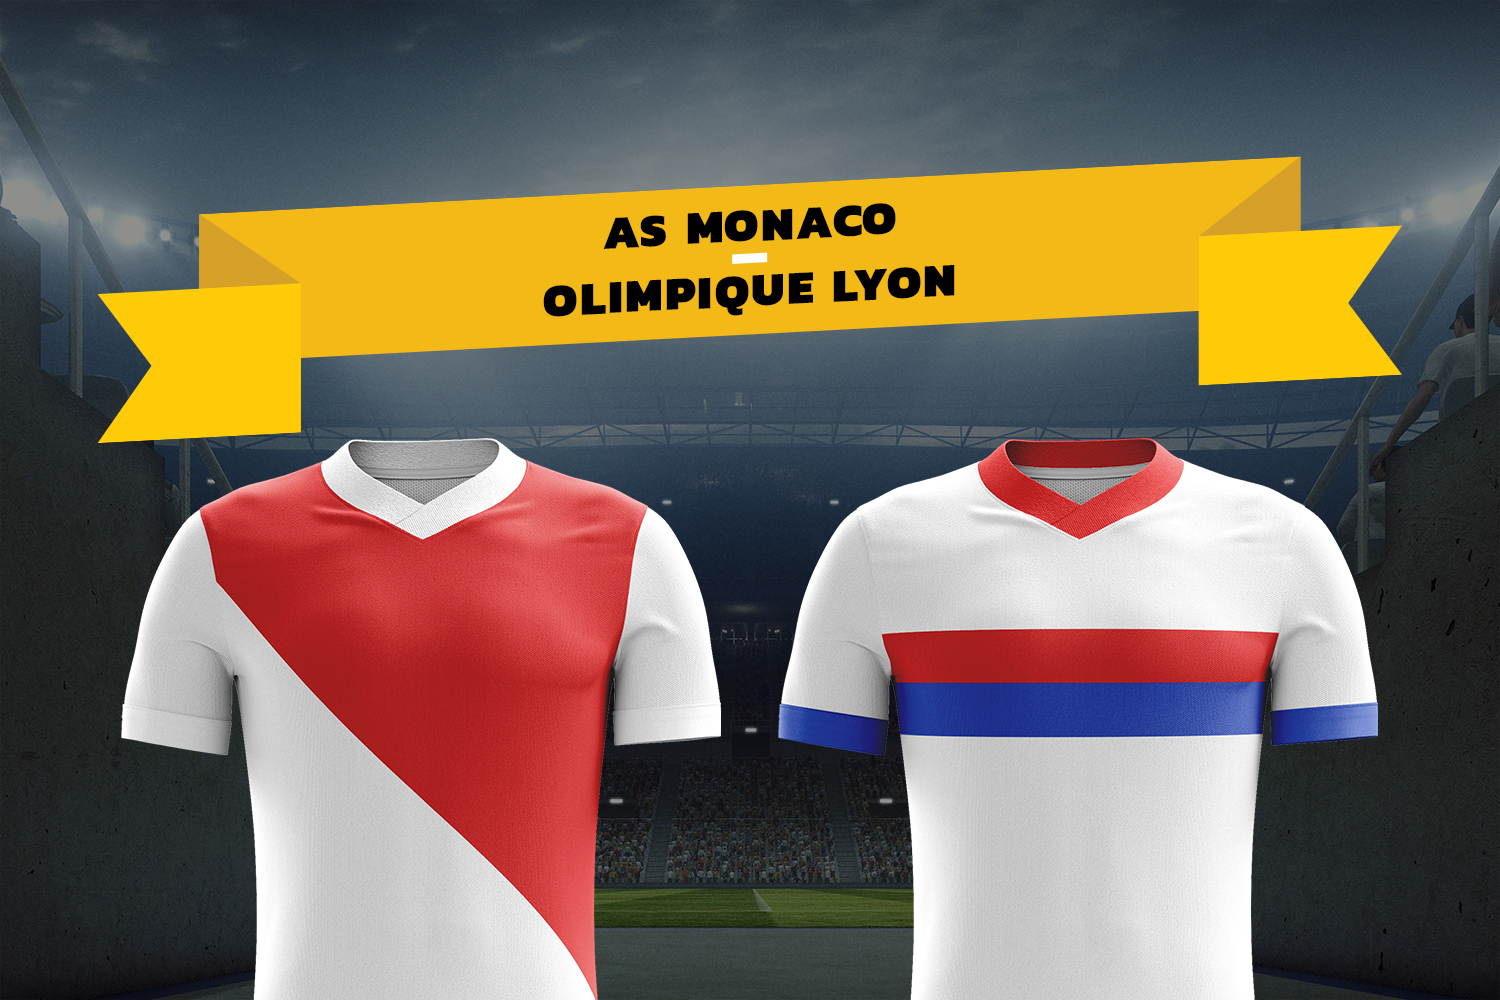 Piątek, 09.08.2019, godz. 20:45: AS Monaco VS Olympique Lyon, Ligue 1 1. kolejka, Monako, Stade Louis II